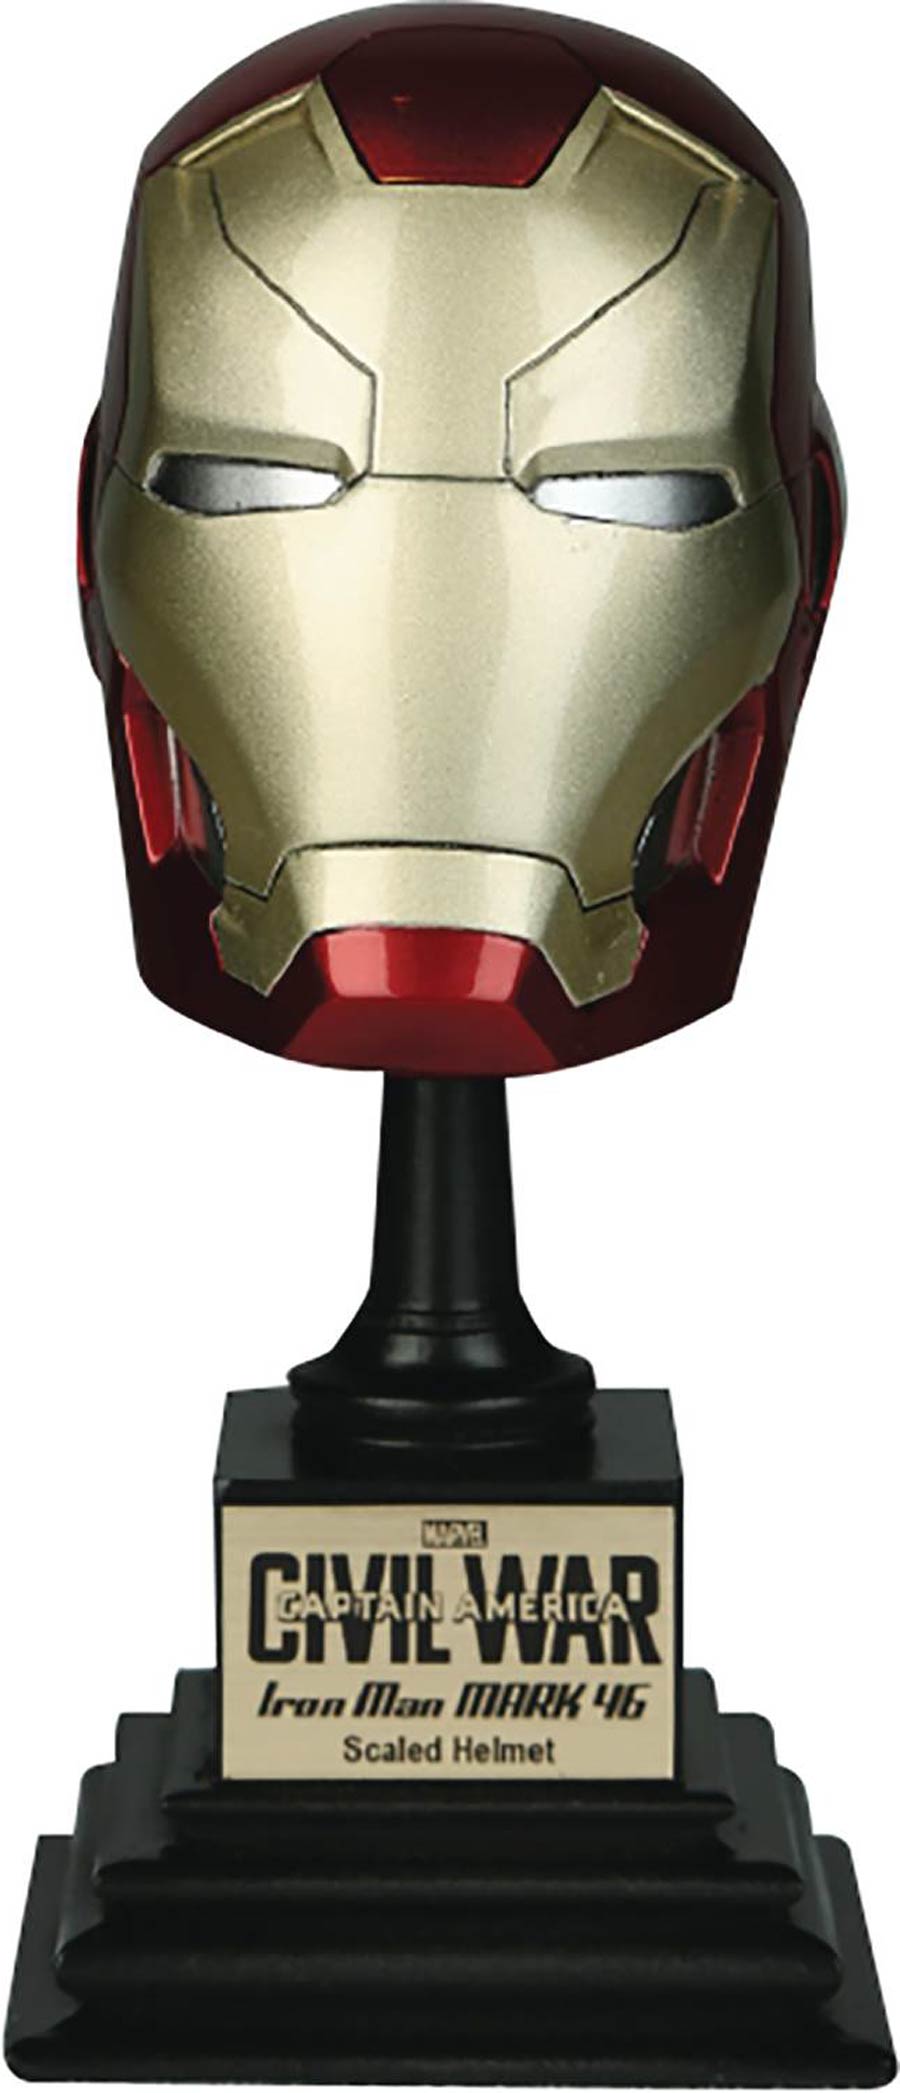 Captain America Civil War Replica Helmet - Iron Man